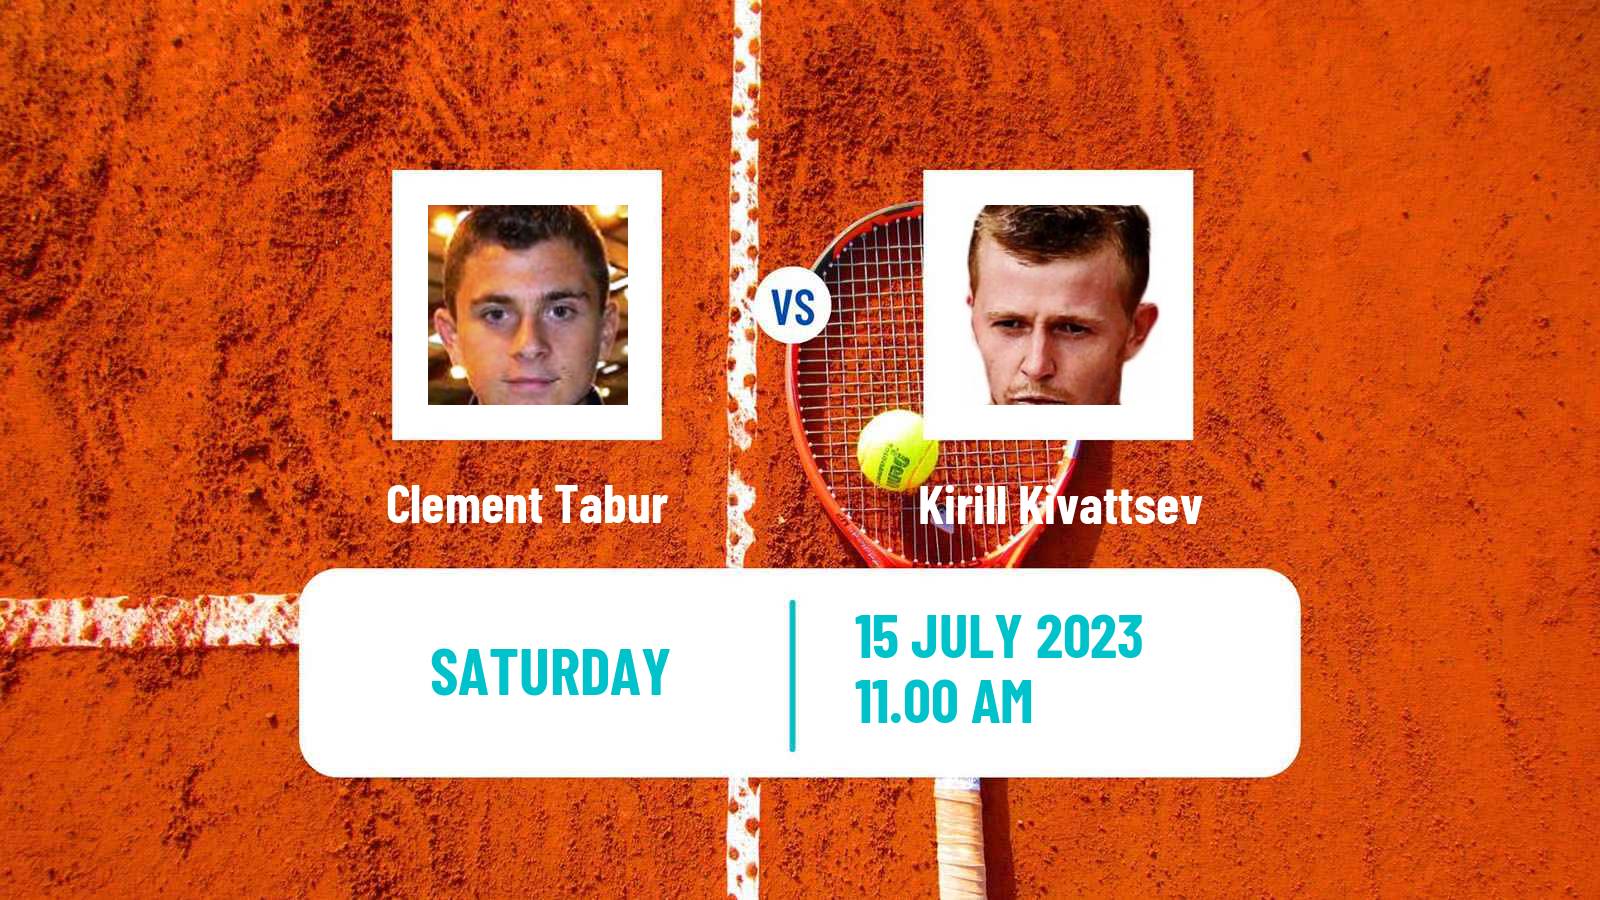 Tennis ITF M25 Padova Men Clement Tabur - Kirill Kivattsev